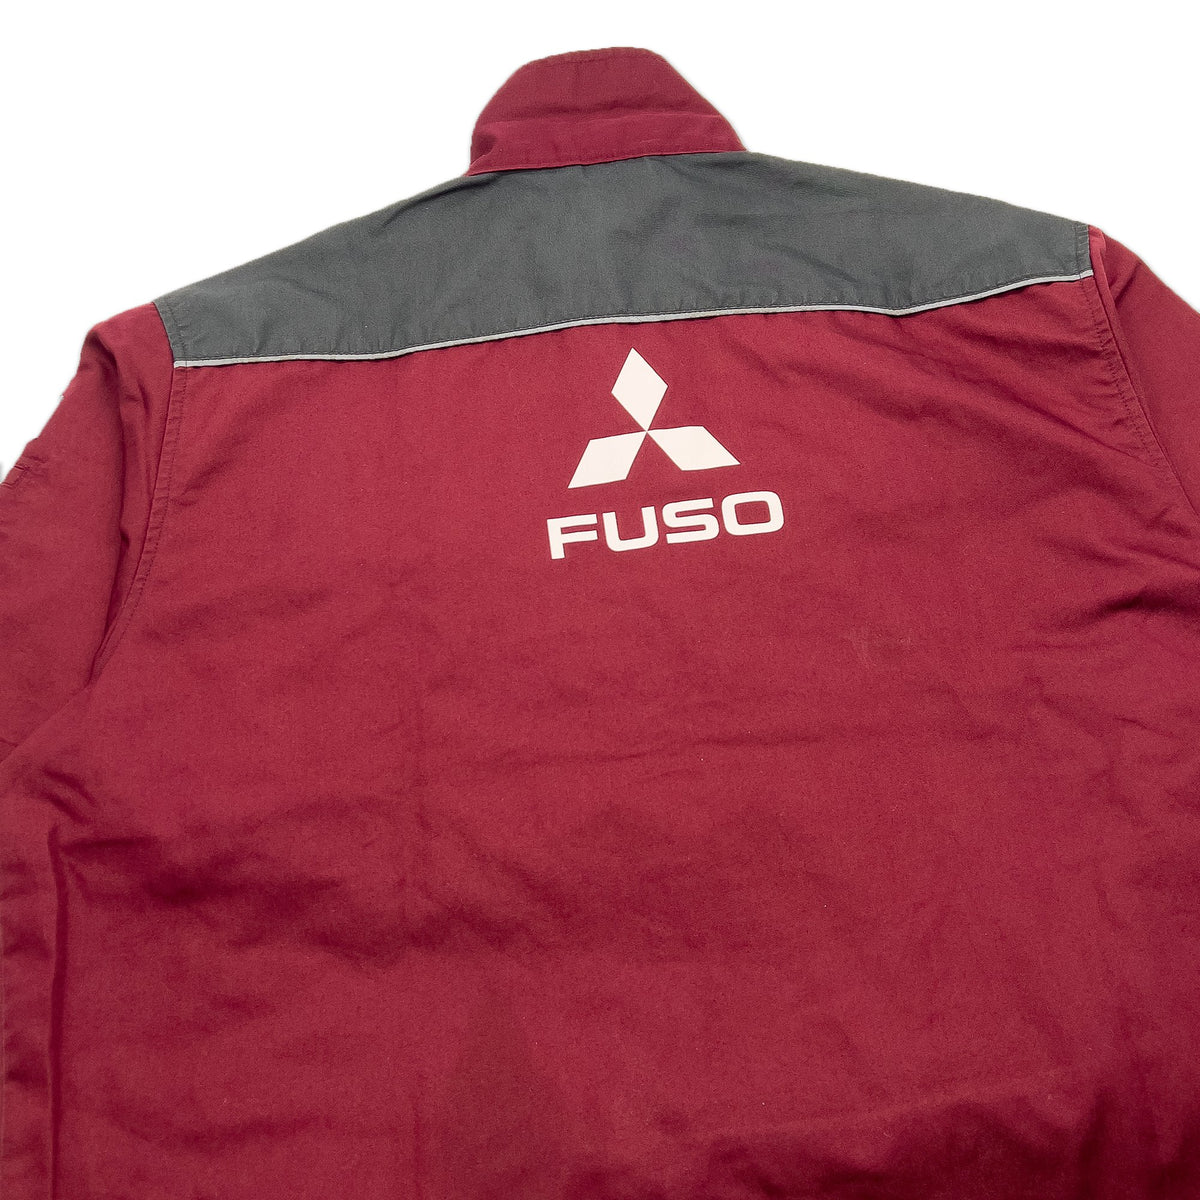 Retro JDM Japan Mitsubishi Motors Fuso Short Sleeve Staff Jacket Red - Sugoi JDM